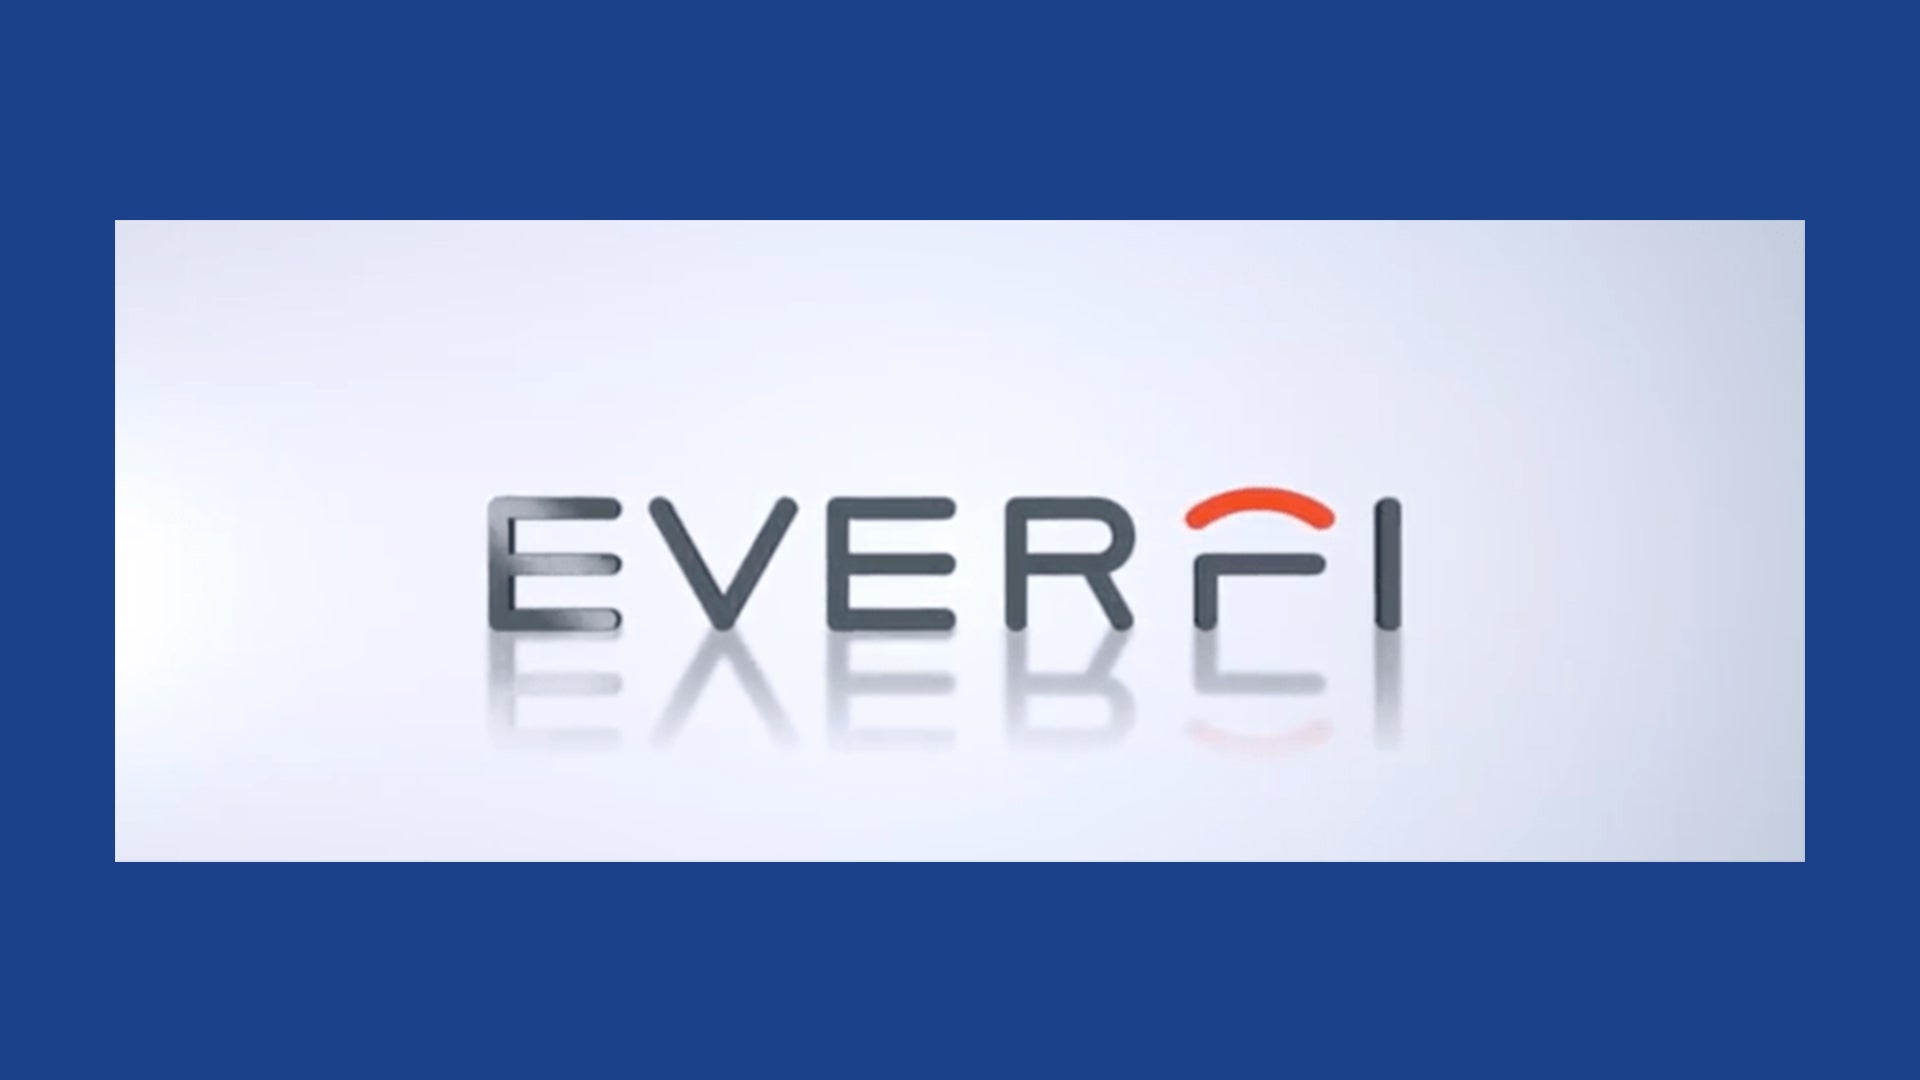 EVERFI provides free online K-12 courses